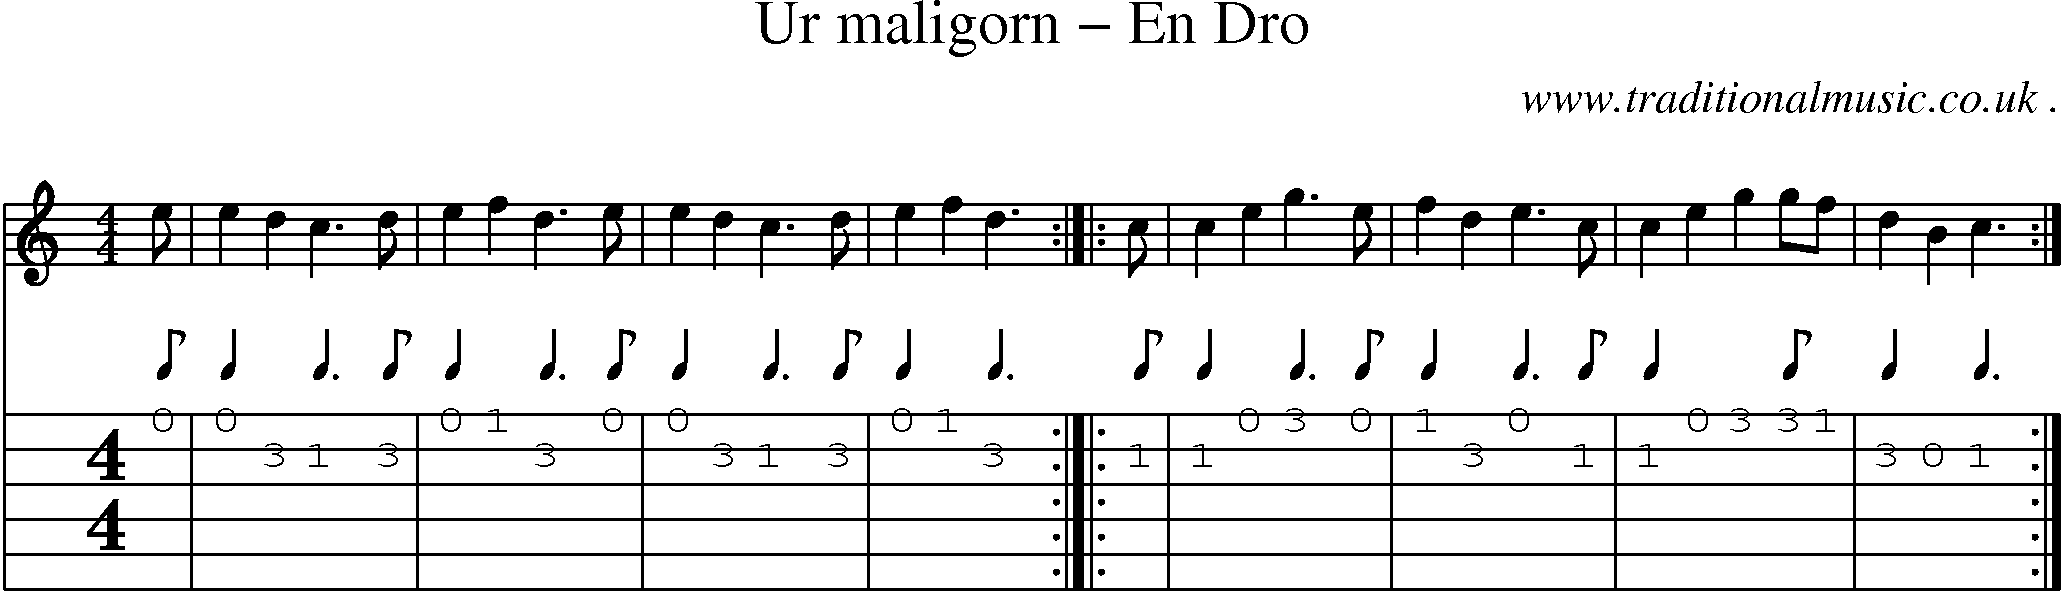 Sheet-Music and Guitar Tabs for Ur Maligorn En Dro